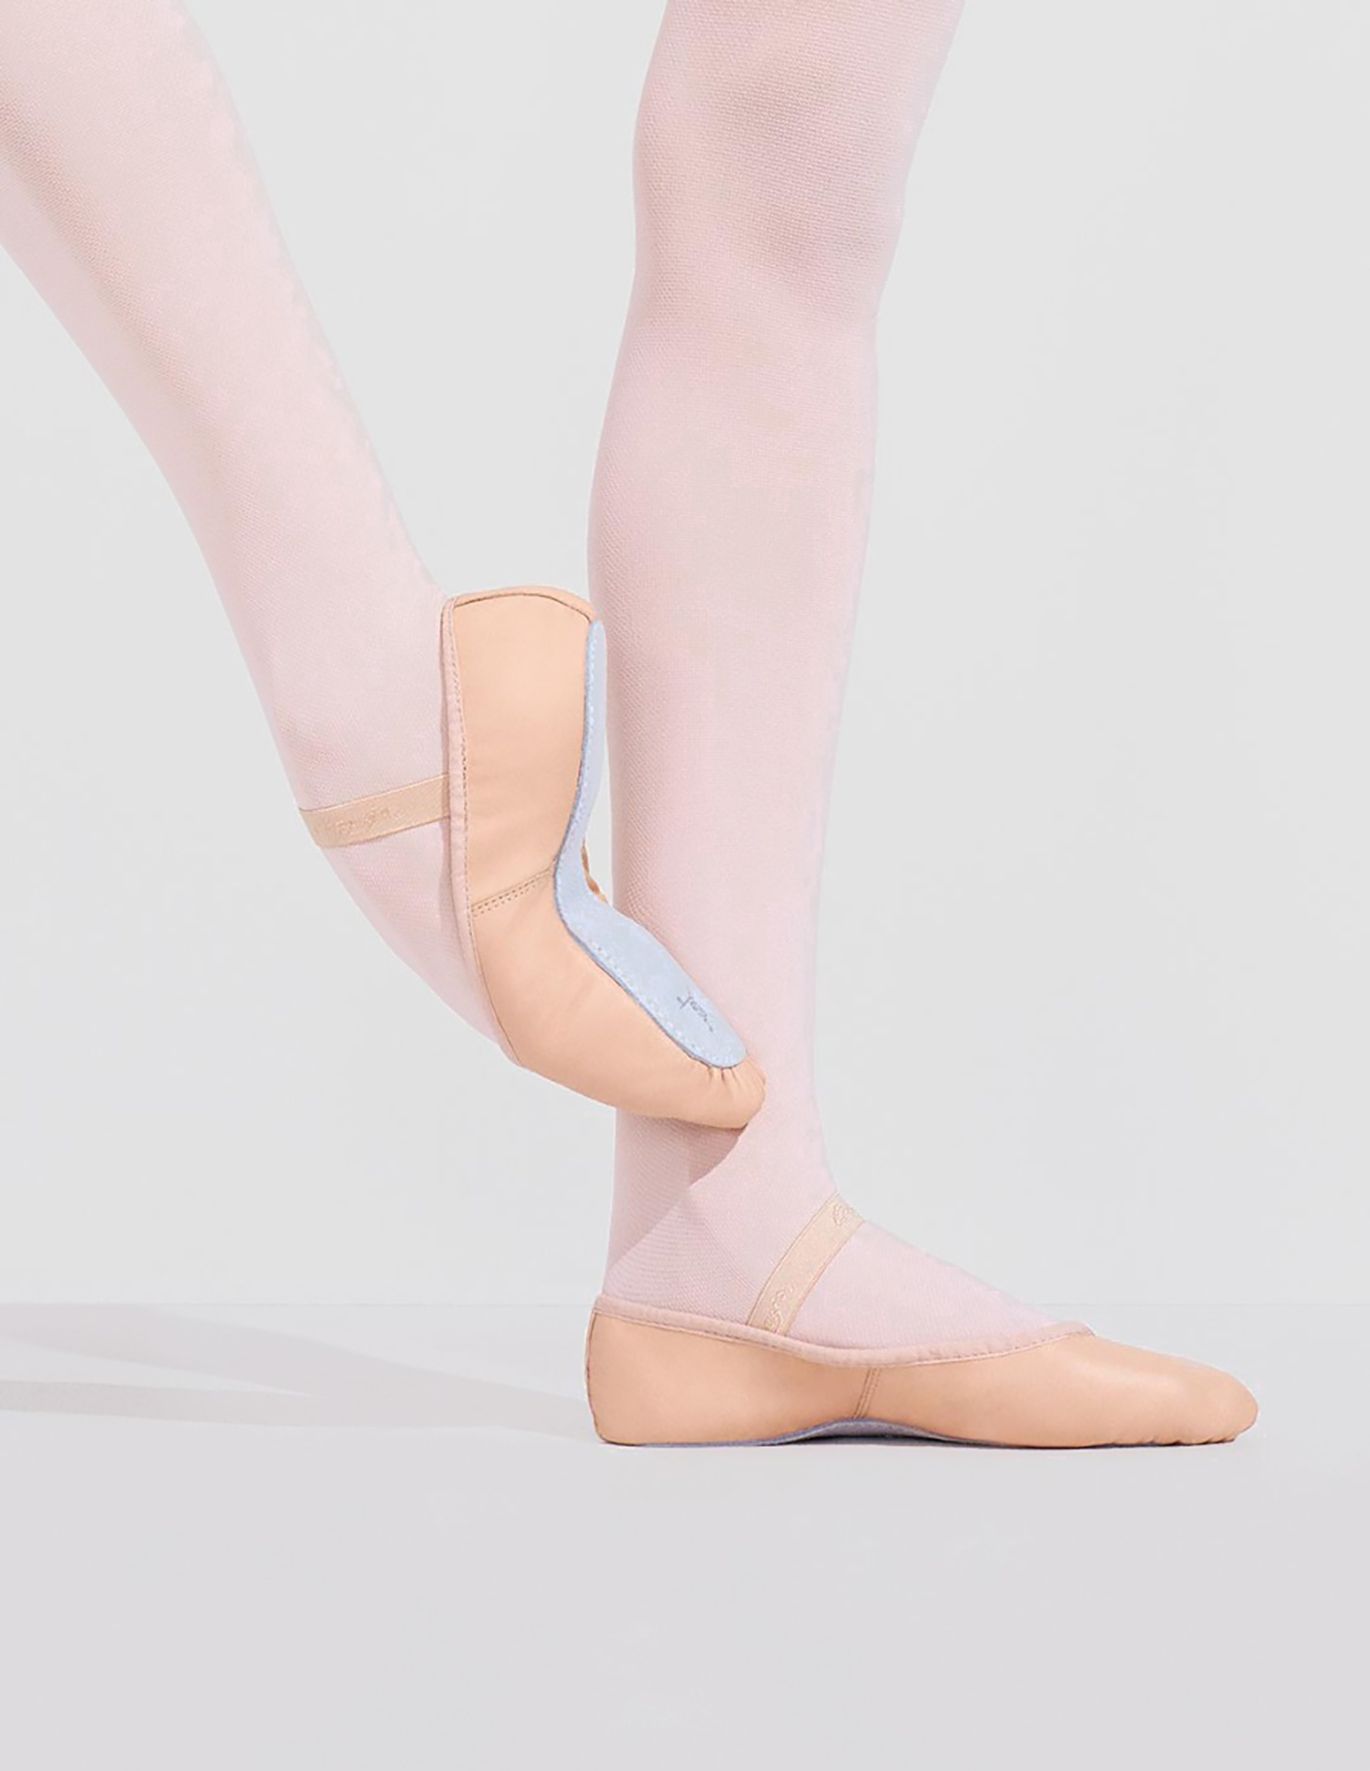 Capezio Girl's Daisy Ballet Shoe